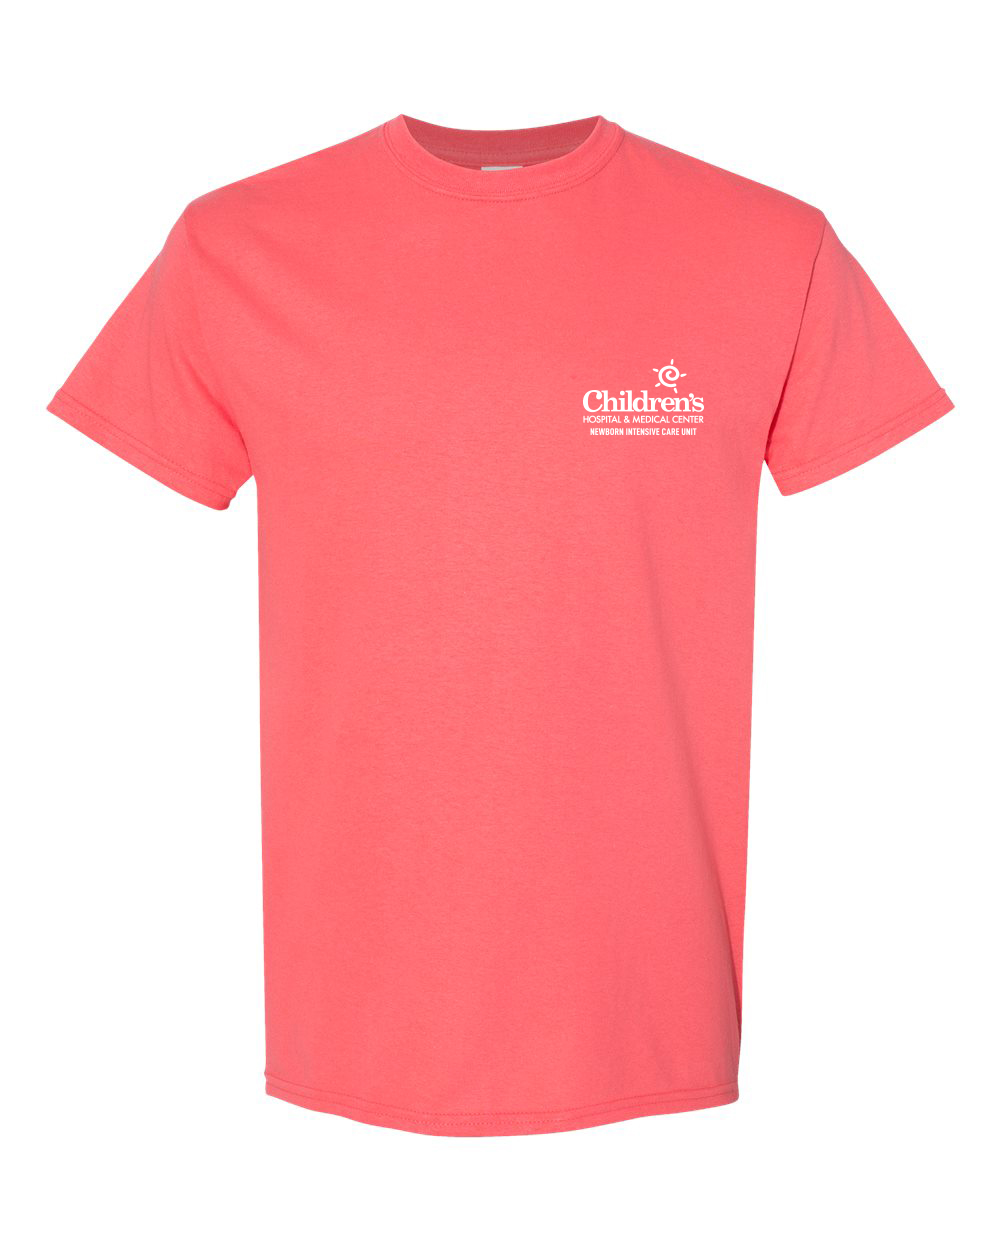 Children's Healthcare of Atlanta Cool Company Worn Look T Shirt